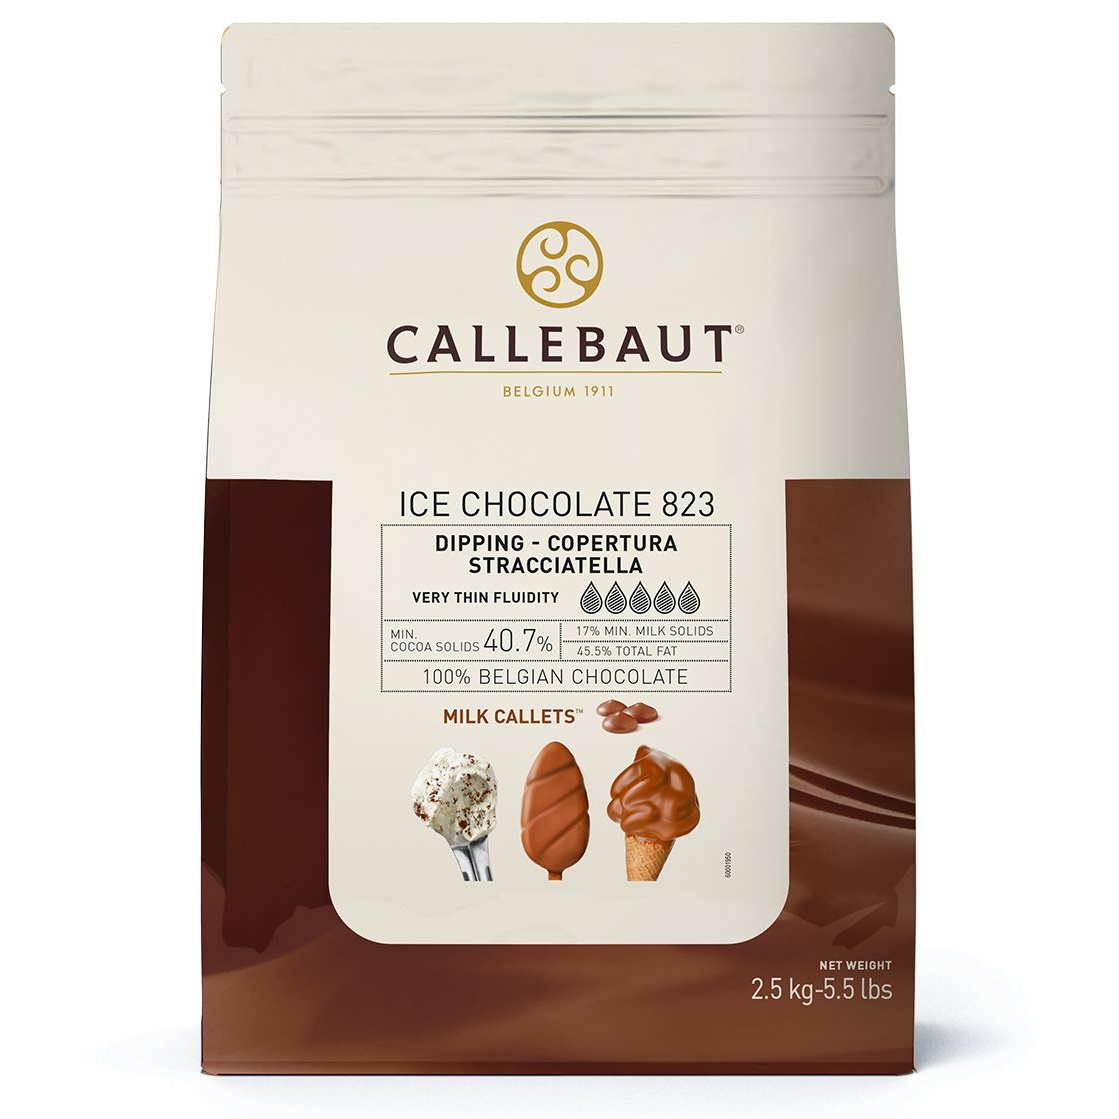 Callebaut 823 33.6% Milk Couverture Chocolate Callets